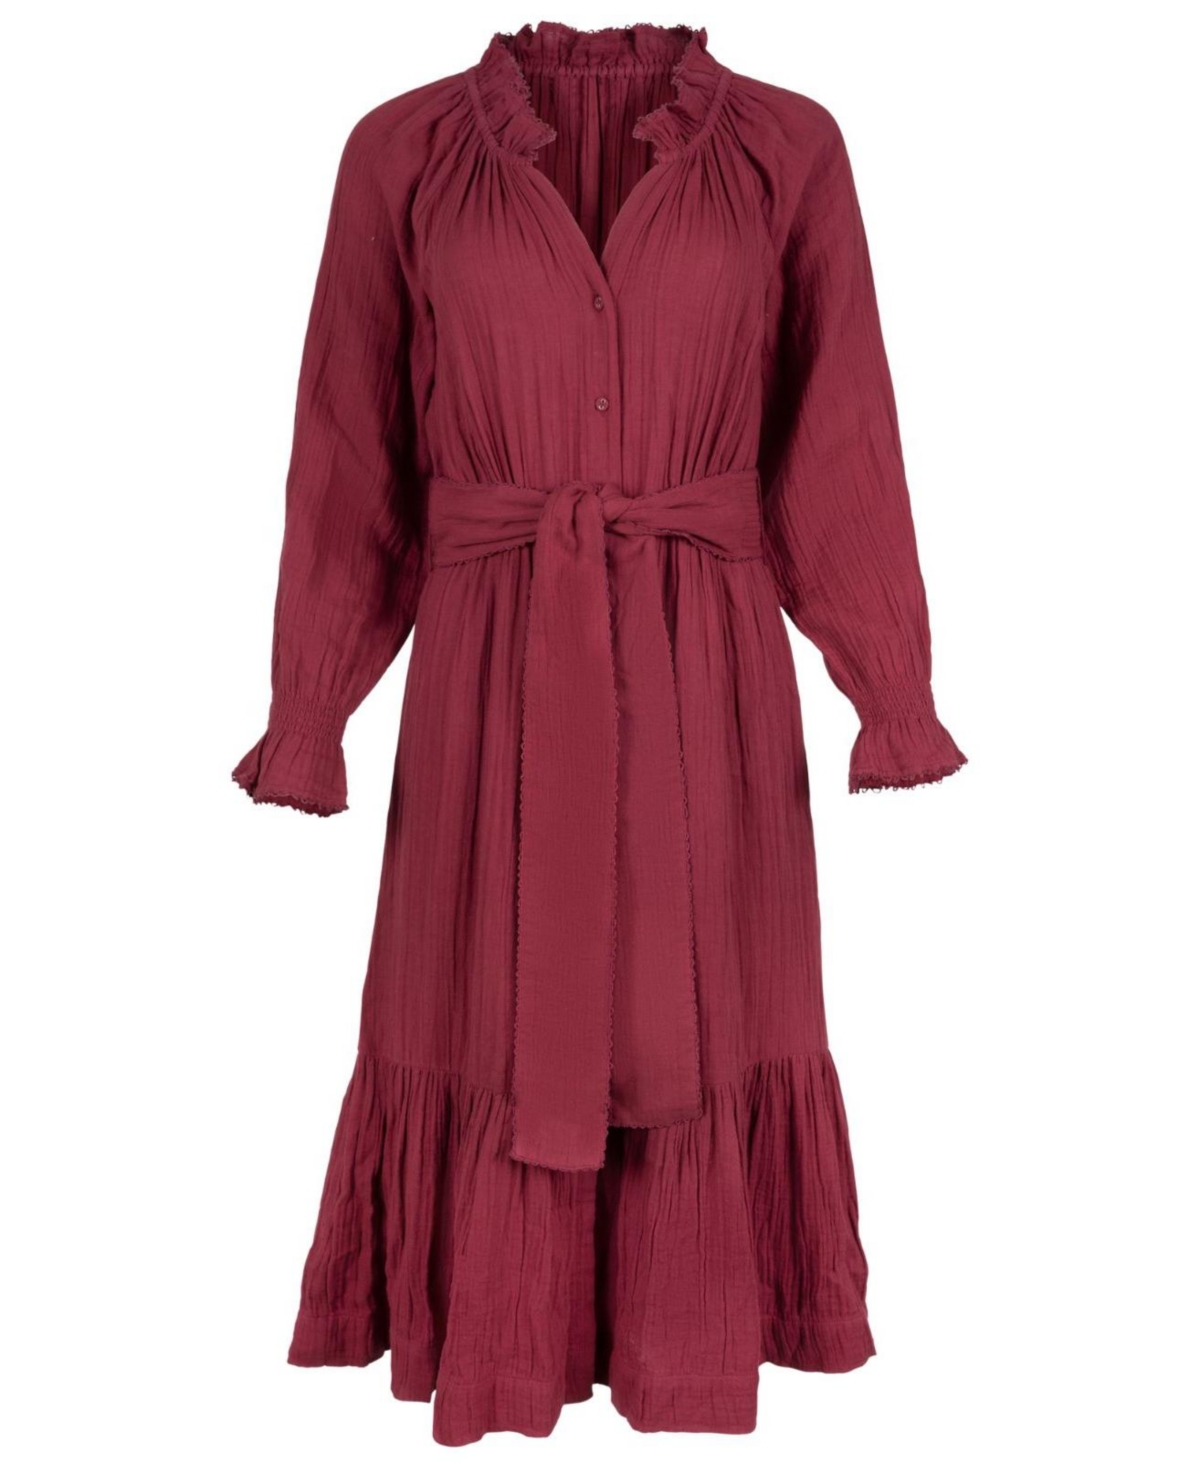 Women's Vivianne Dress in Cranberry - Cranberry